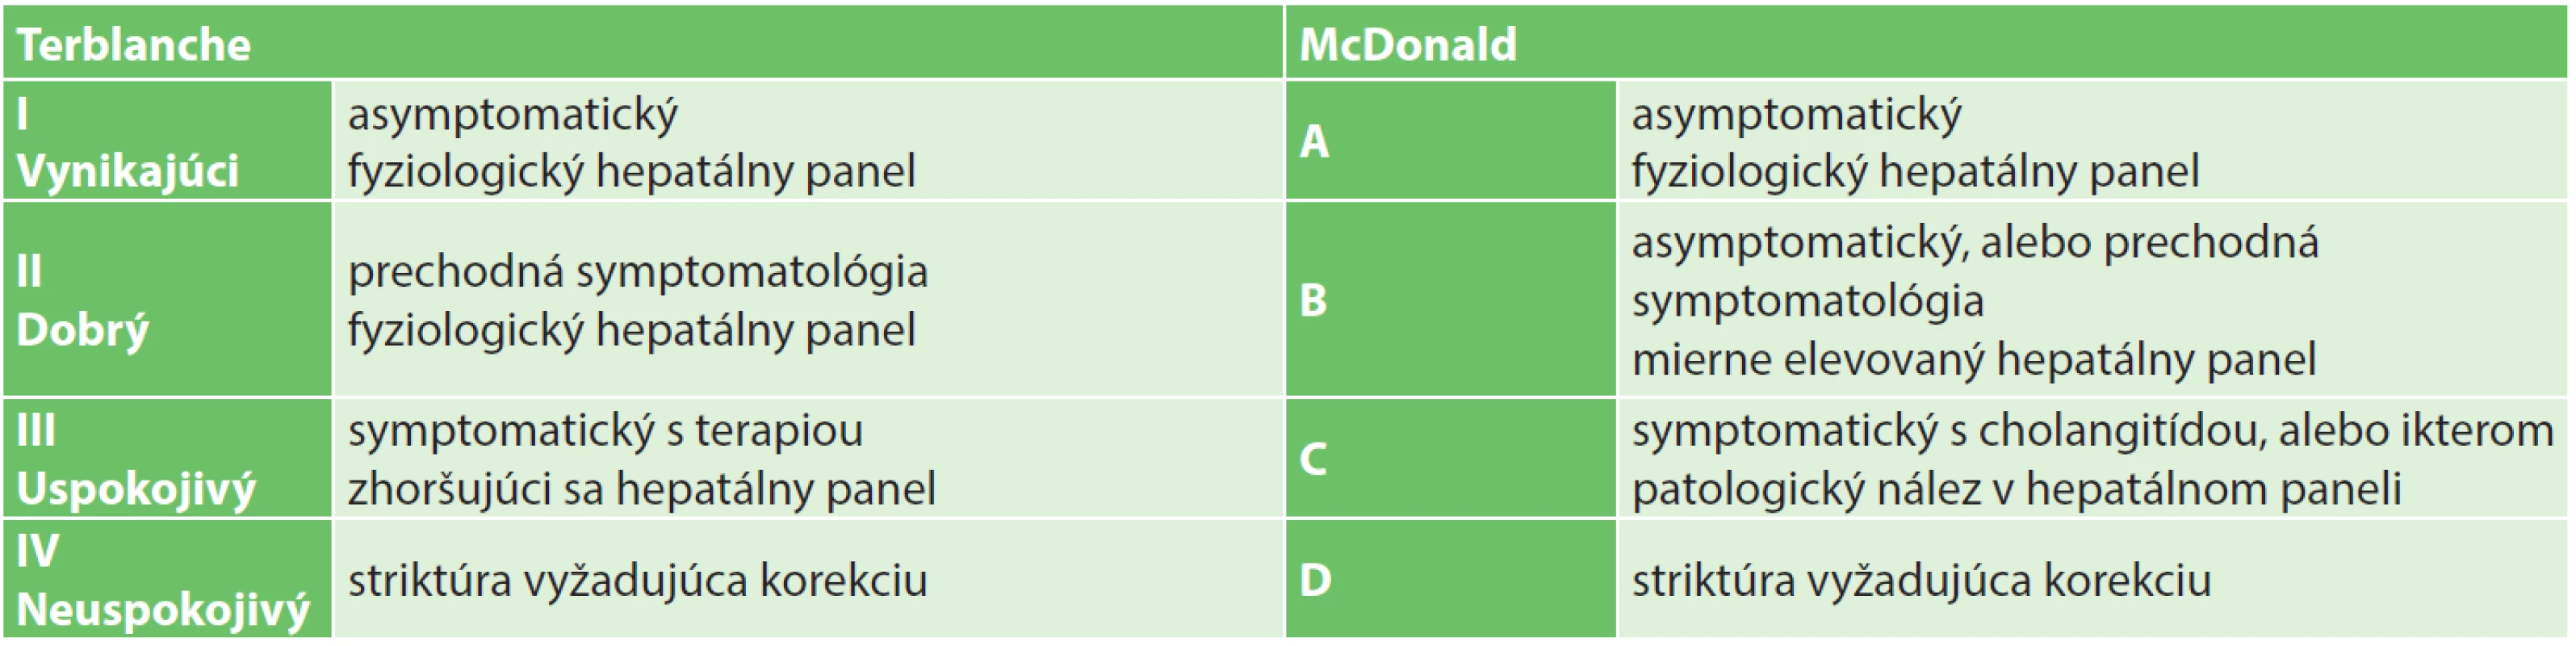 Hodnotenie efektu rekonštrukcie podľa Terblanche a McDonald
Tab. 1: Terblanche and McDonald criteria for evaluation of effectiveness of biliary repair